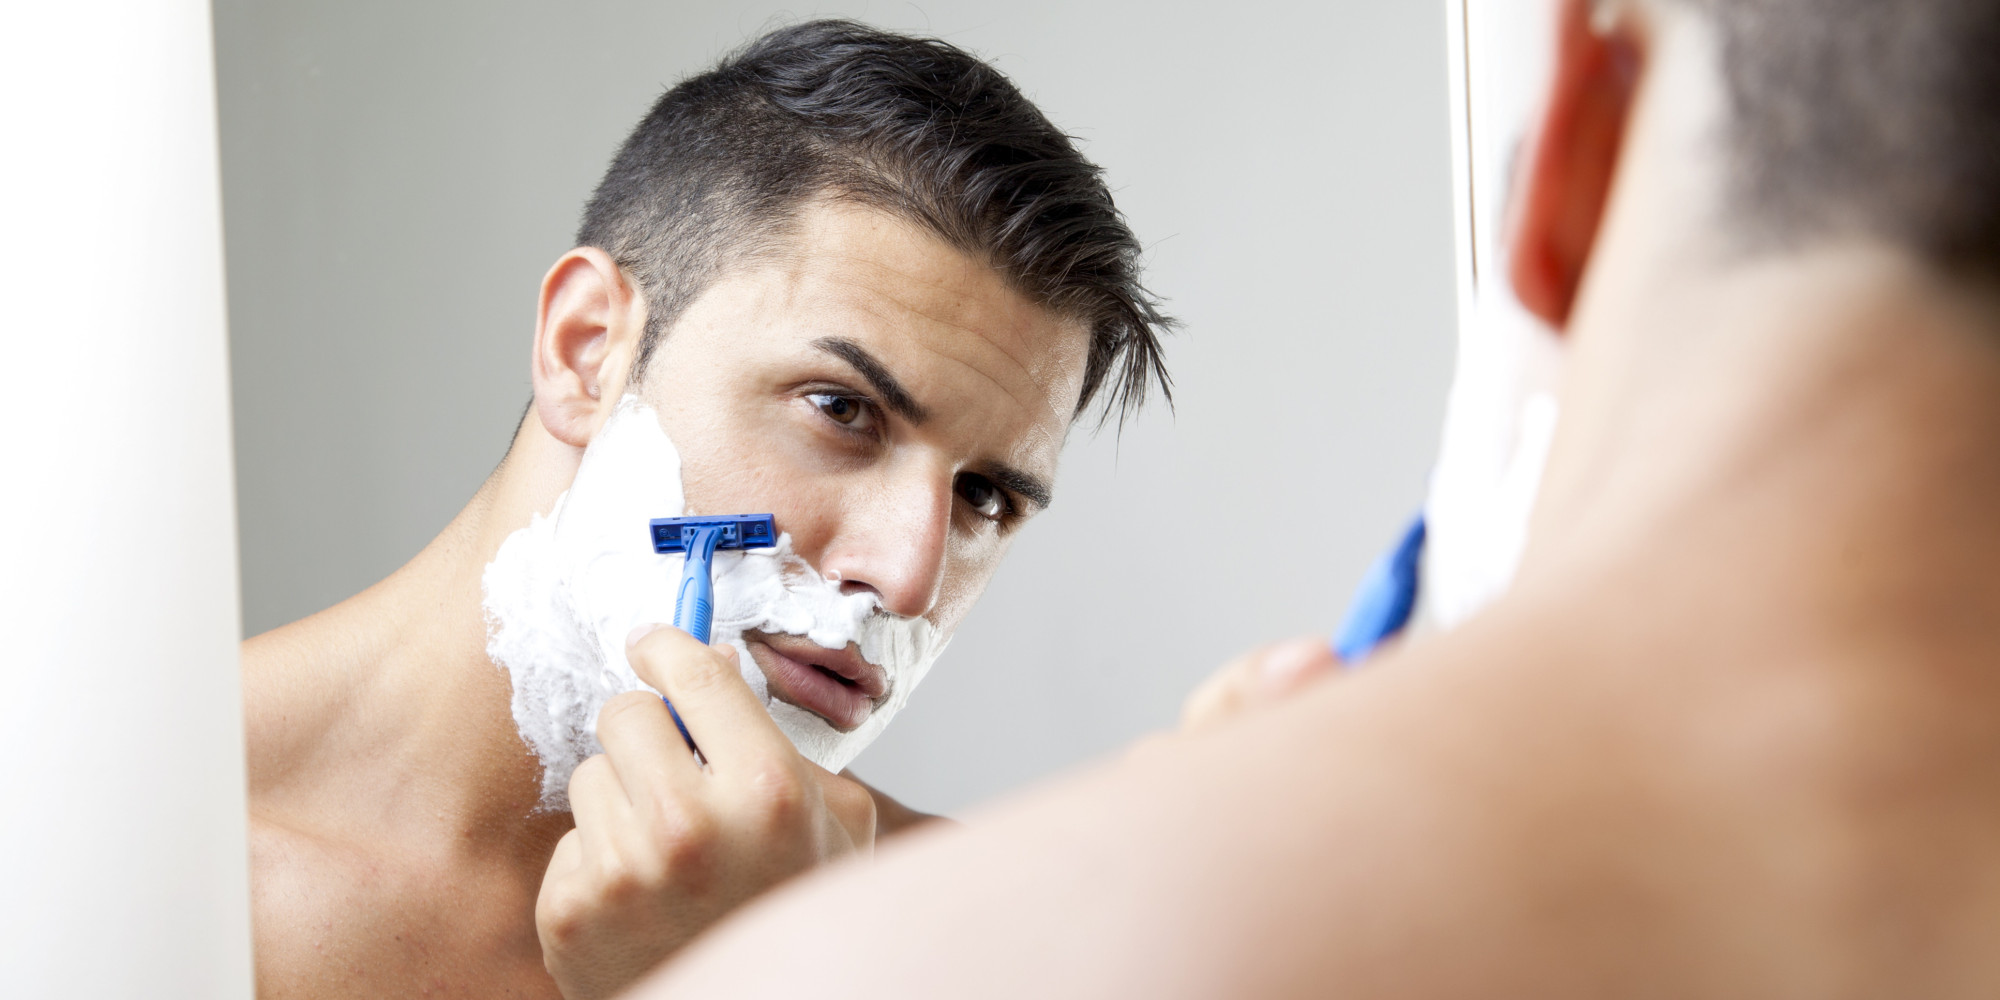 Winter Grooming Tips for Men